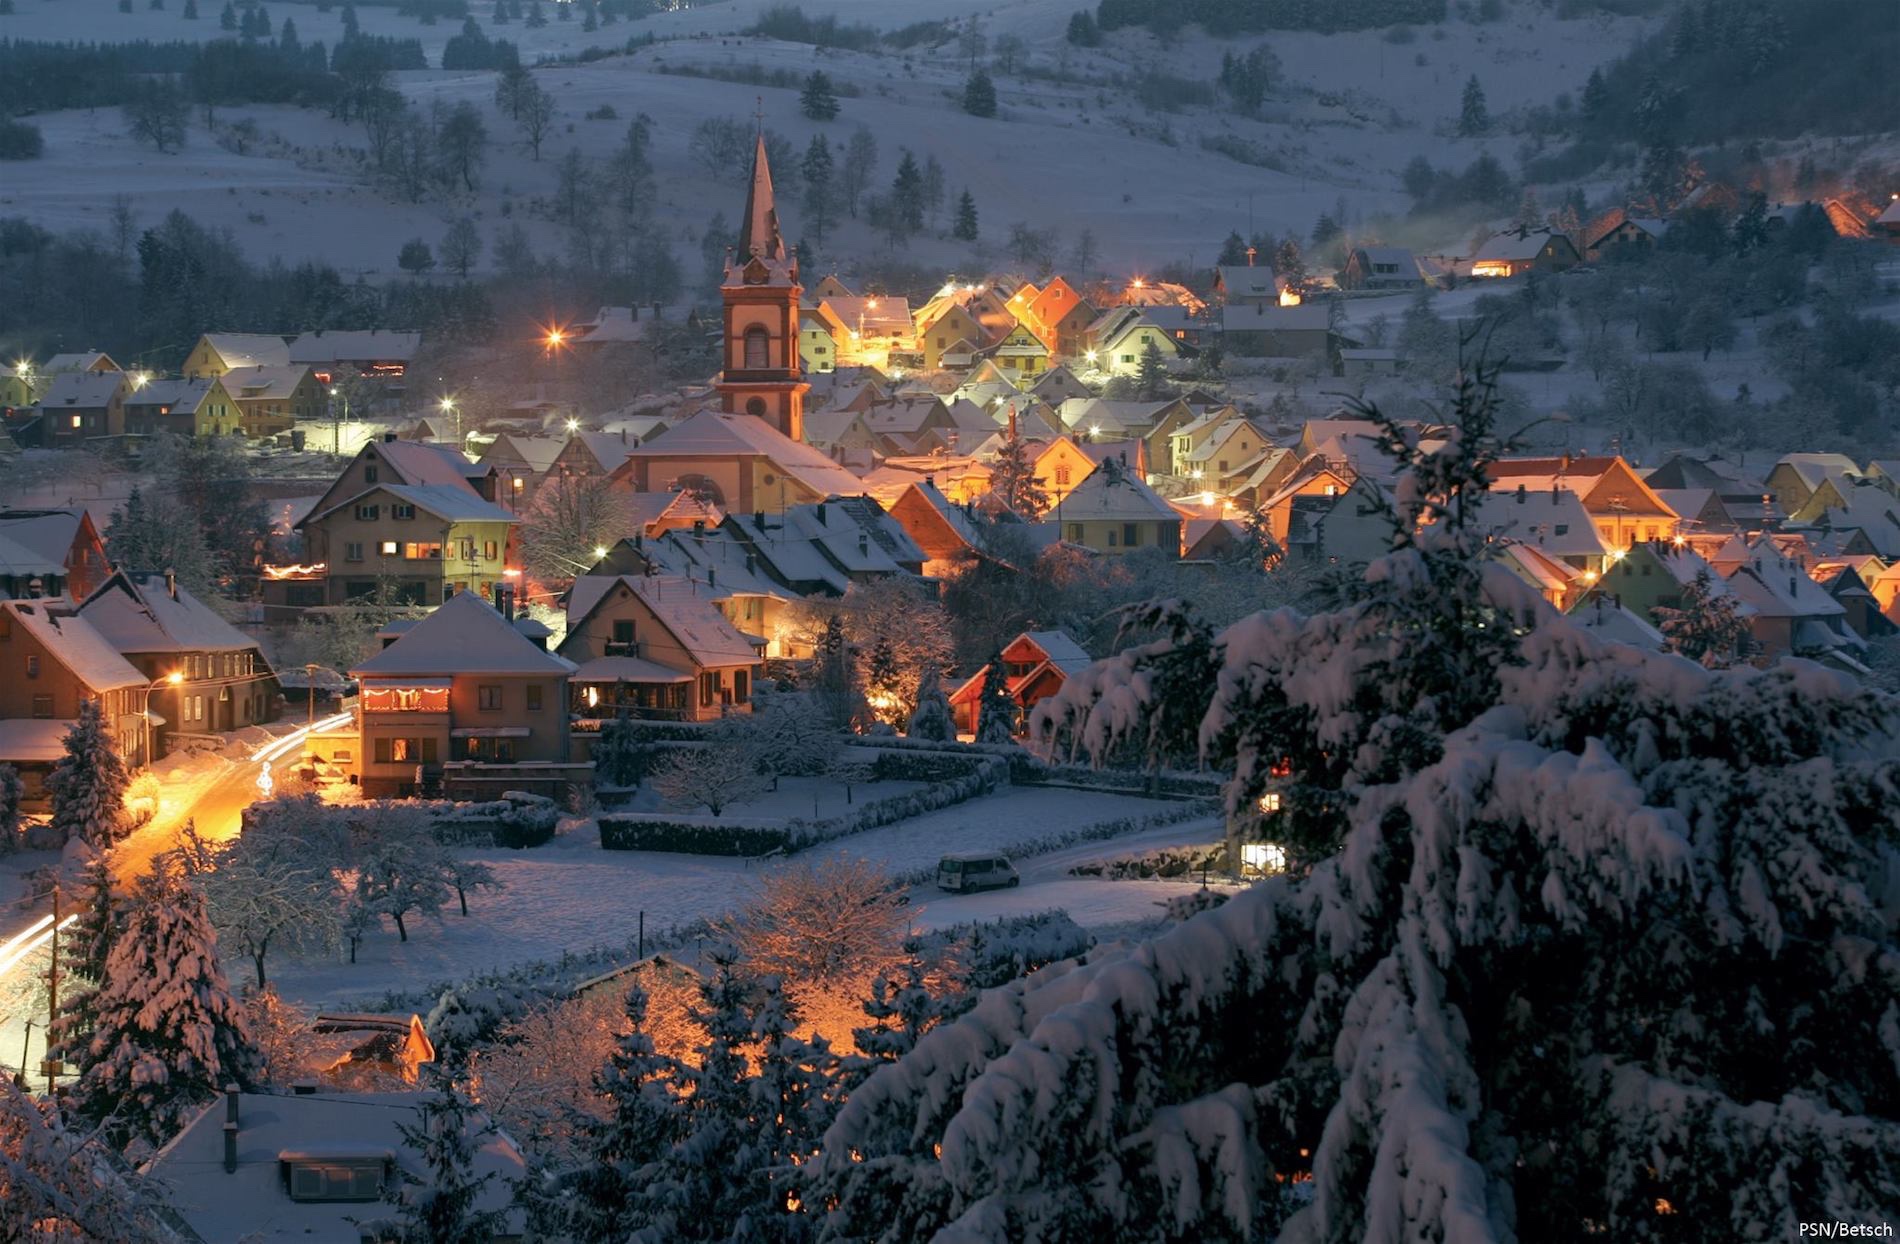 Winter in Alsace